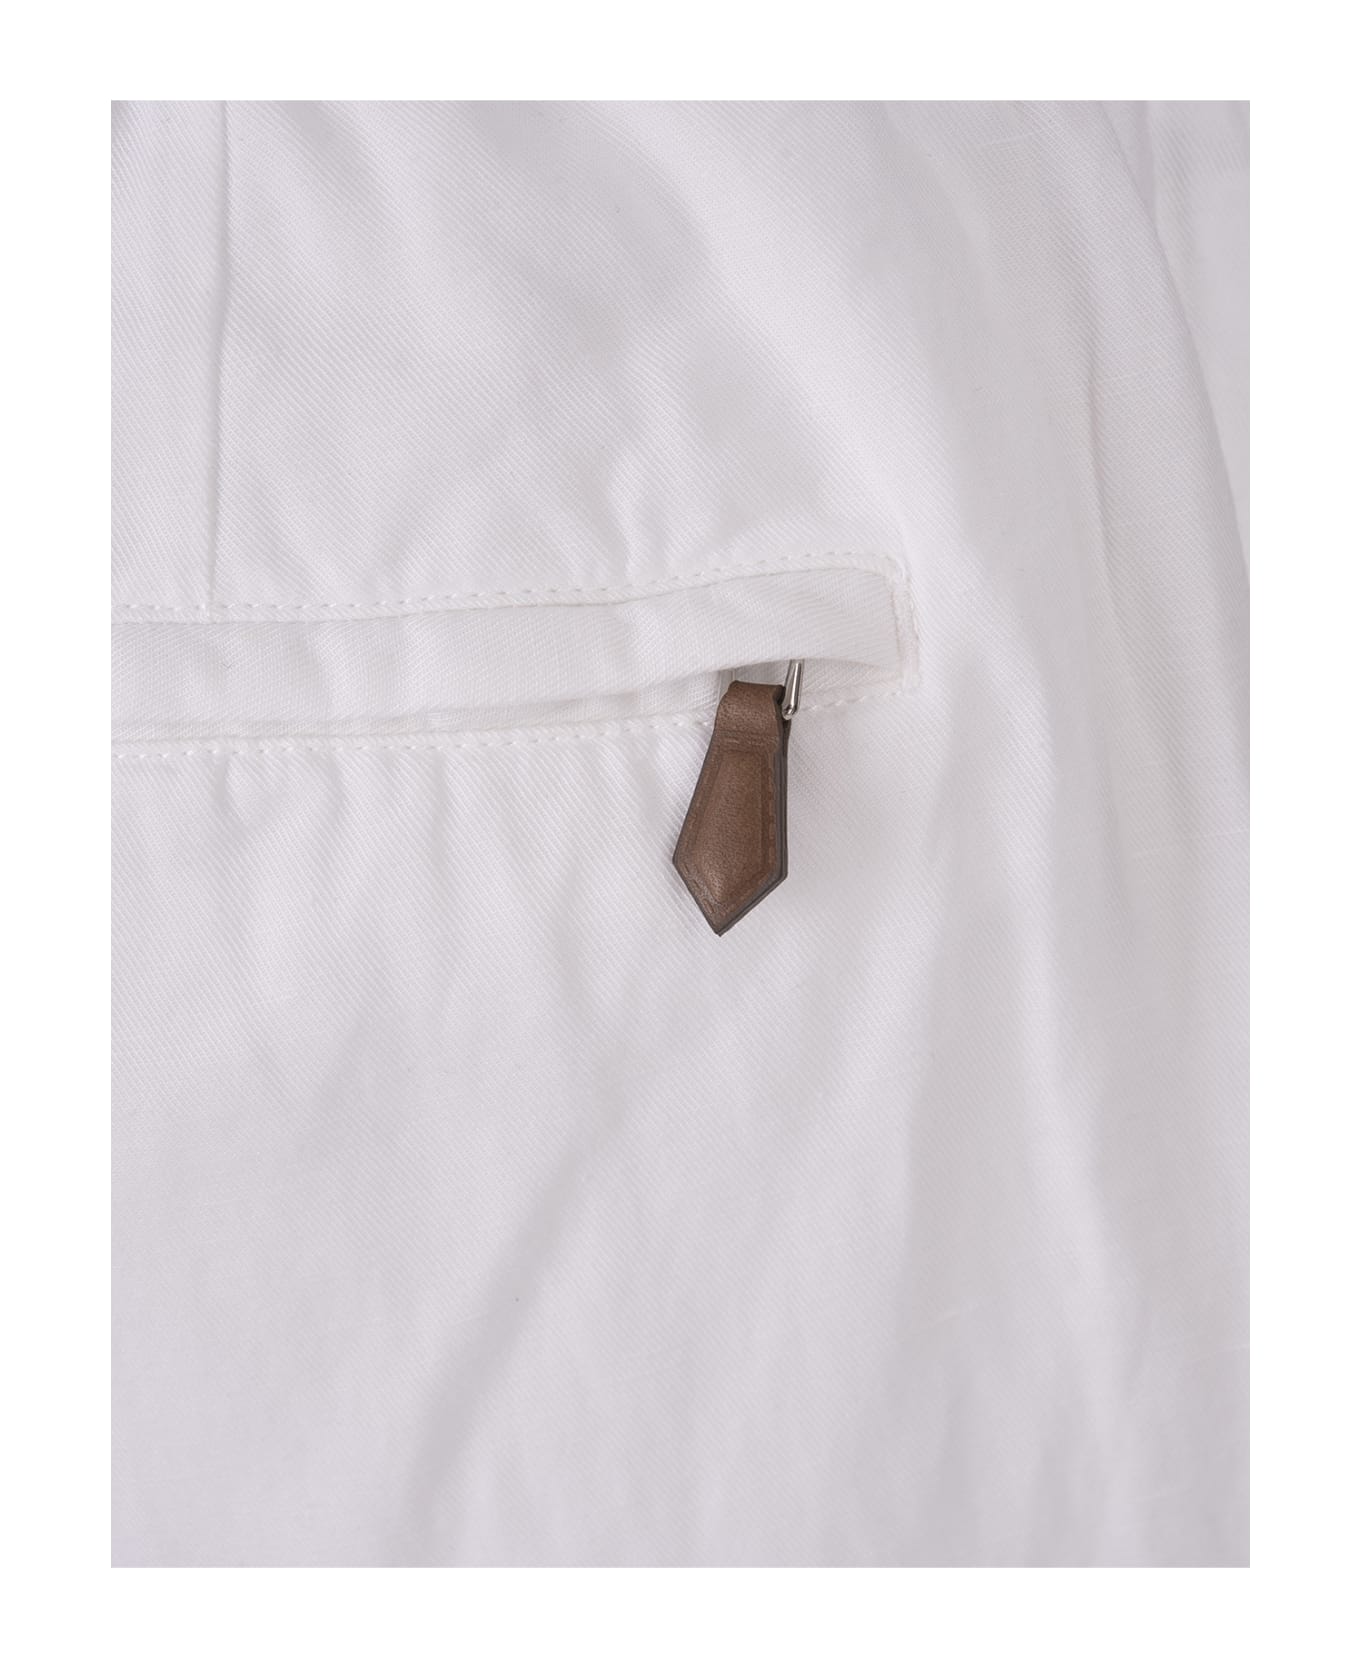 PT01 White Linen Blend Soft Fit Trousers - White